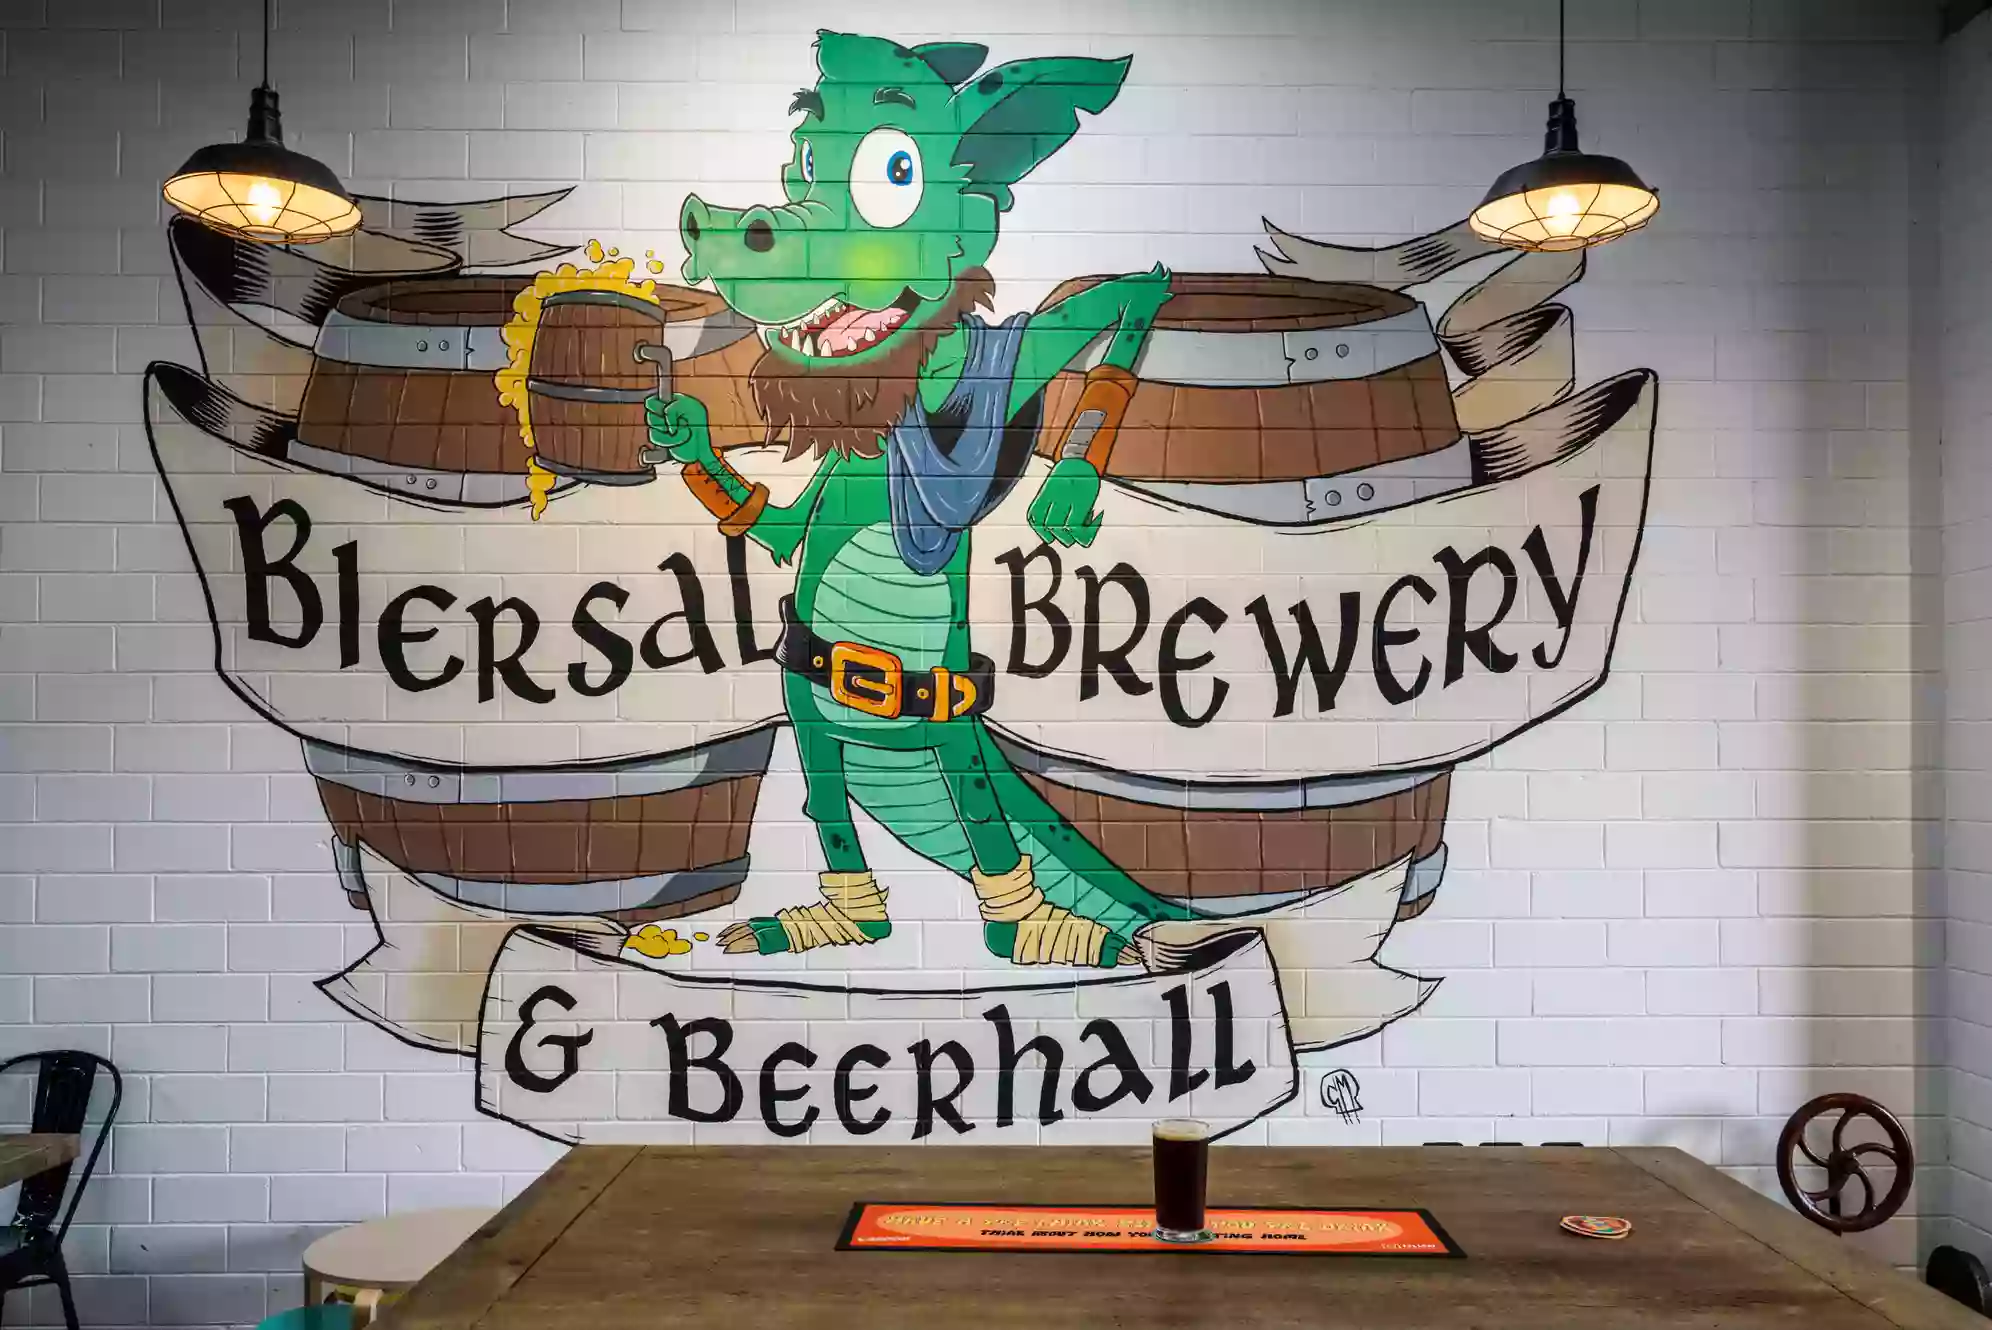 Biersal Brewery & Beerhall